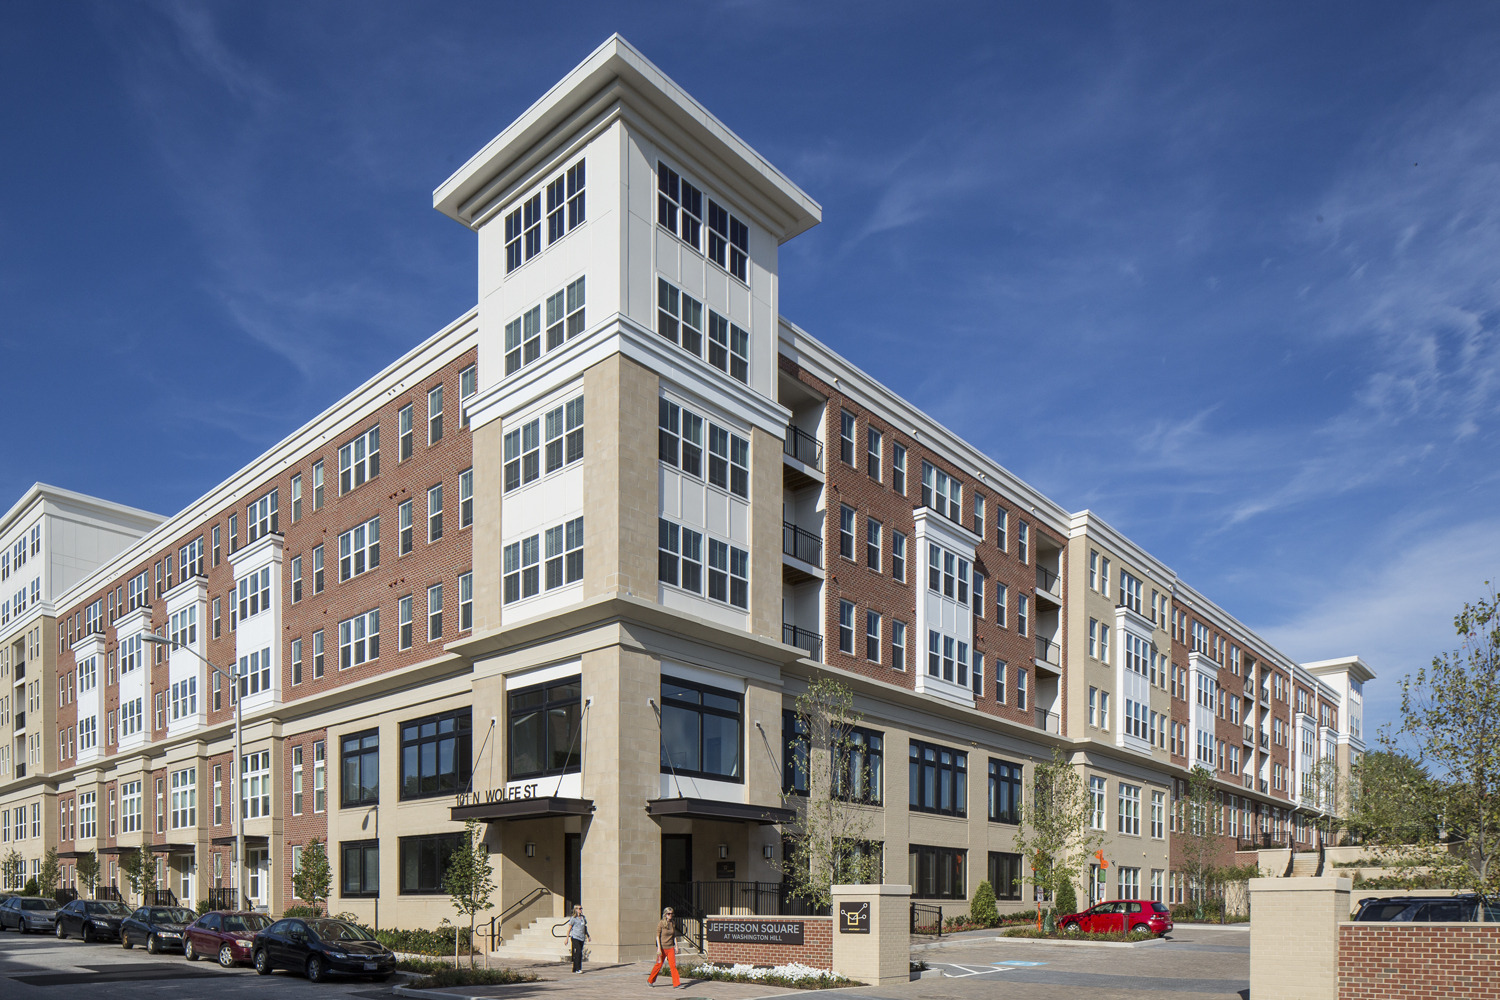 Hamilton Zanze Marks Twelfth Maryland Acquisition With 304-Unit Jefferson Square at Washington Hill Apartment Community